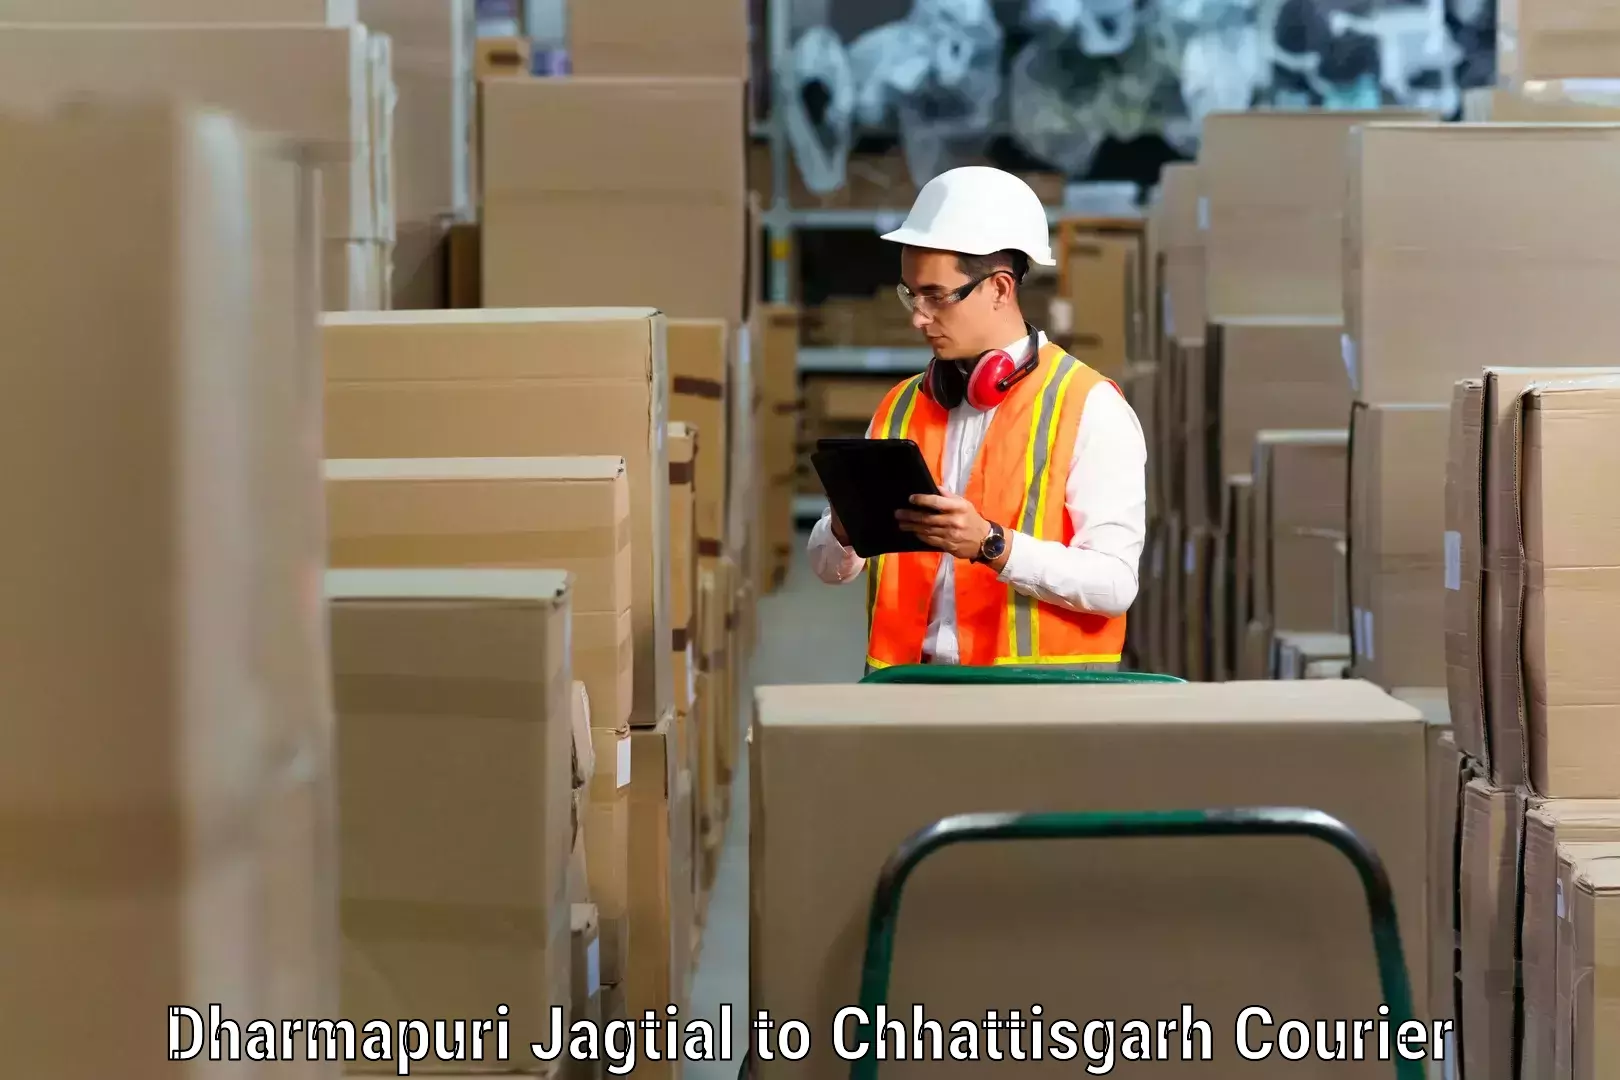 Full-service movers Dharmapuri Jagtial to Korea Chhattisgarh